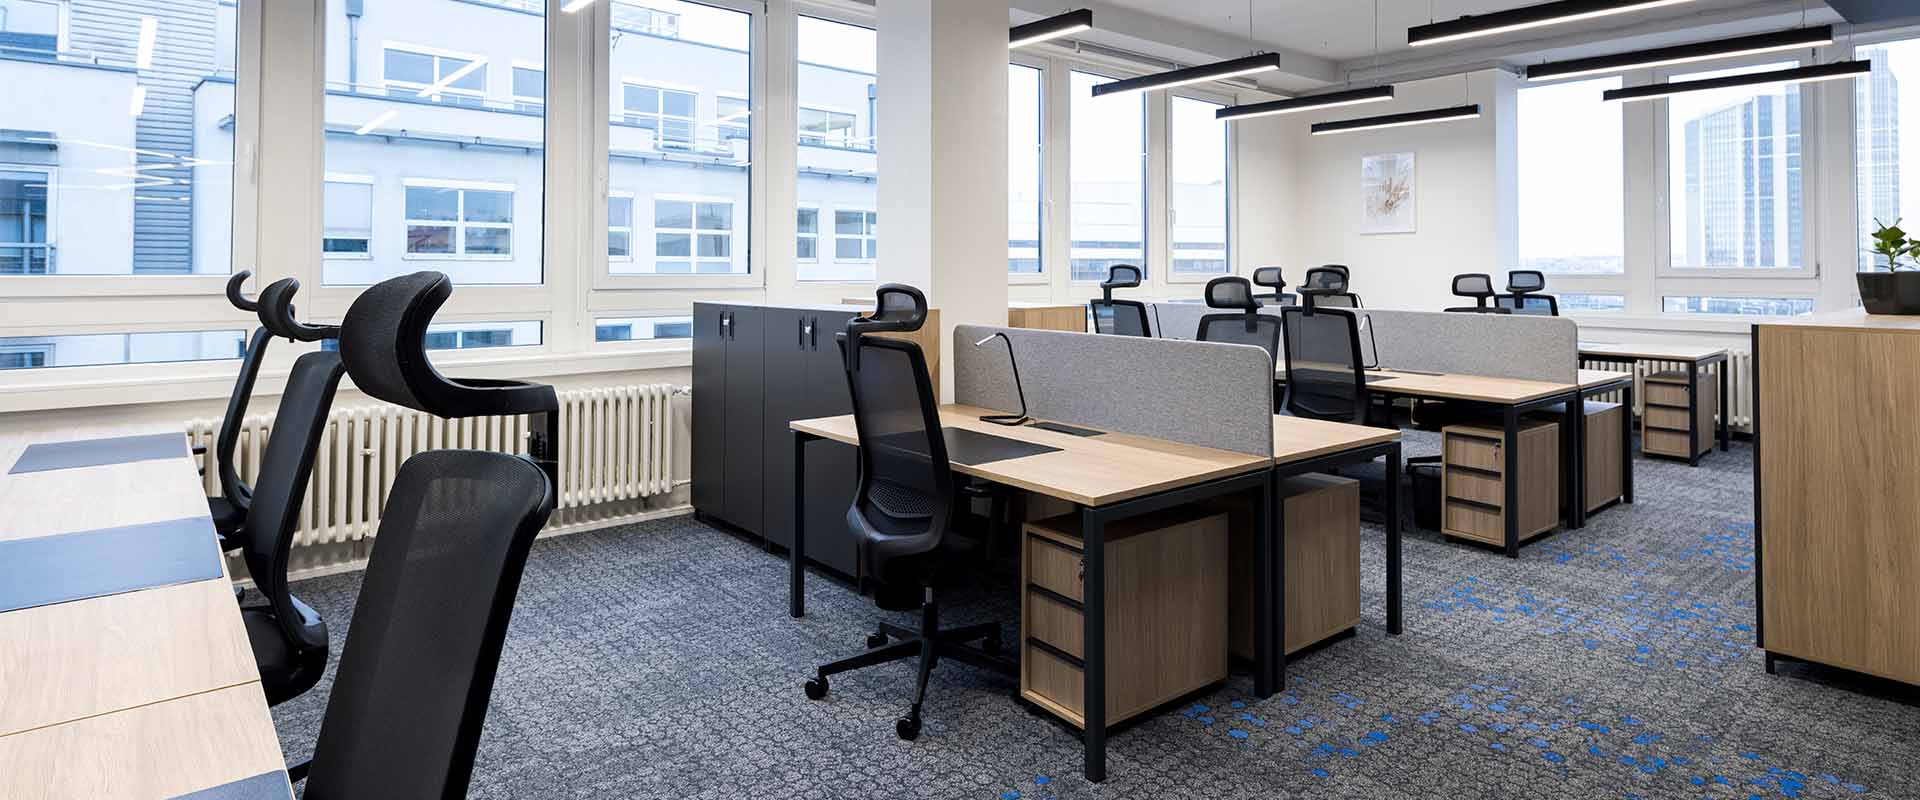 Office Furniture Open Plan Desks Storage Black and Light Laminate